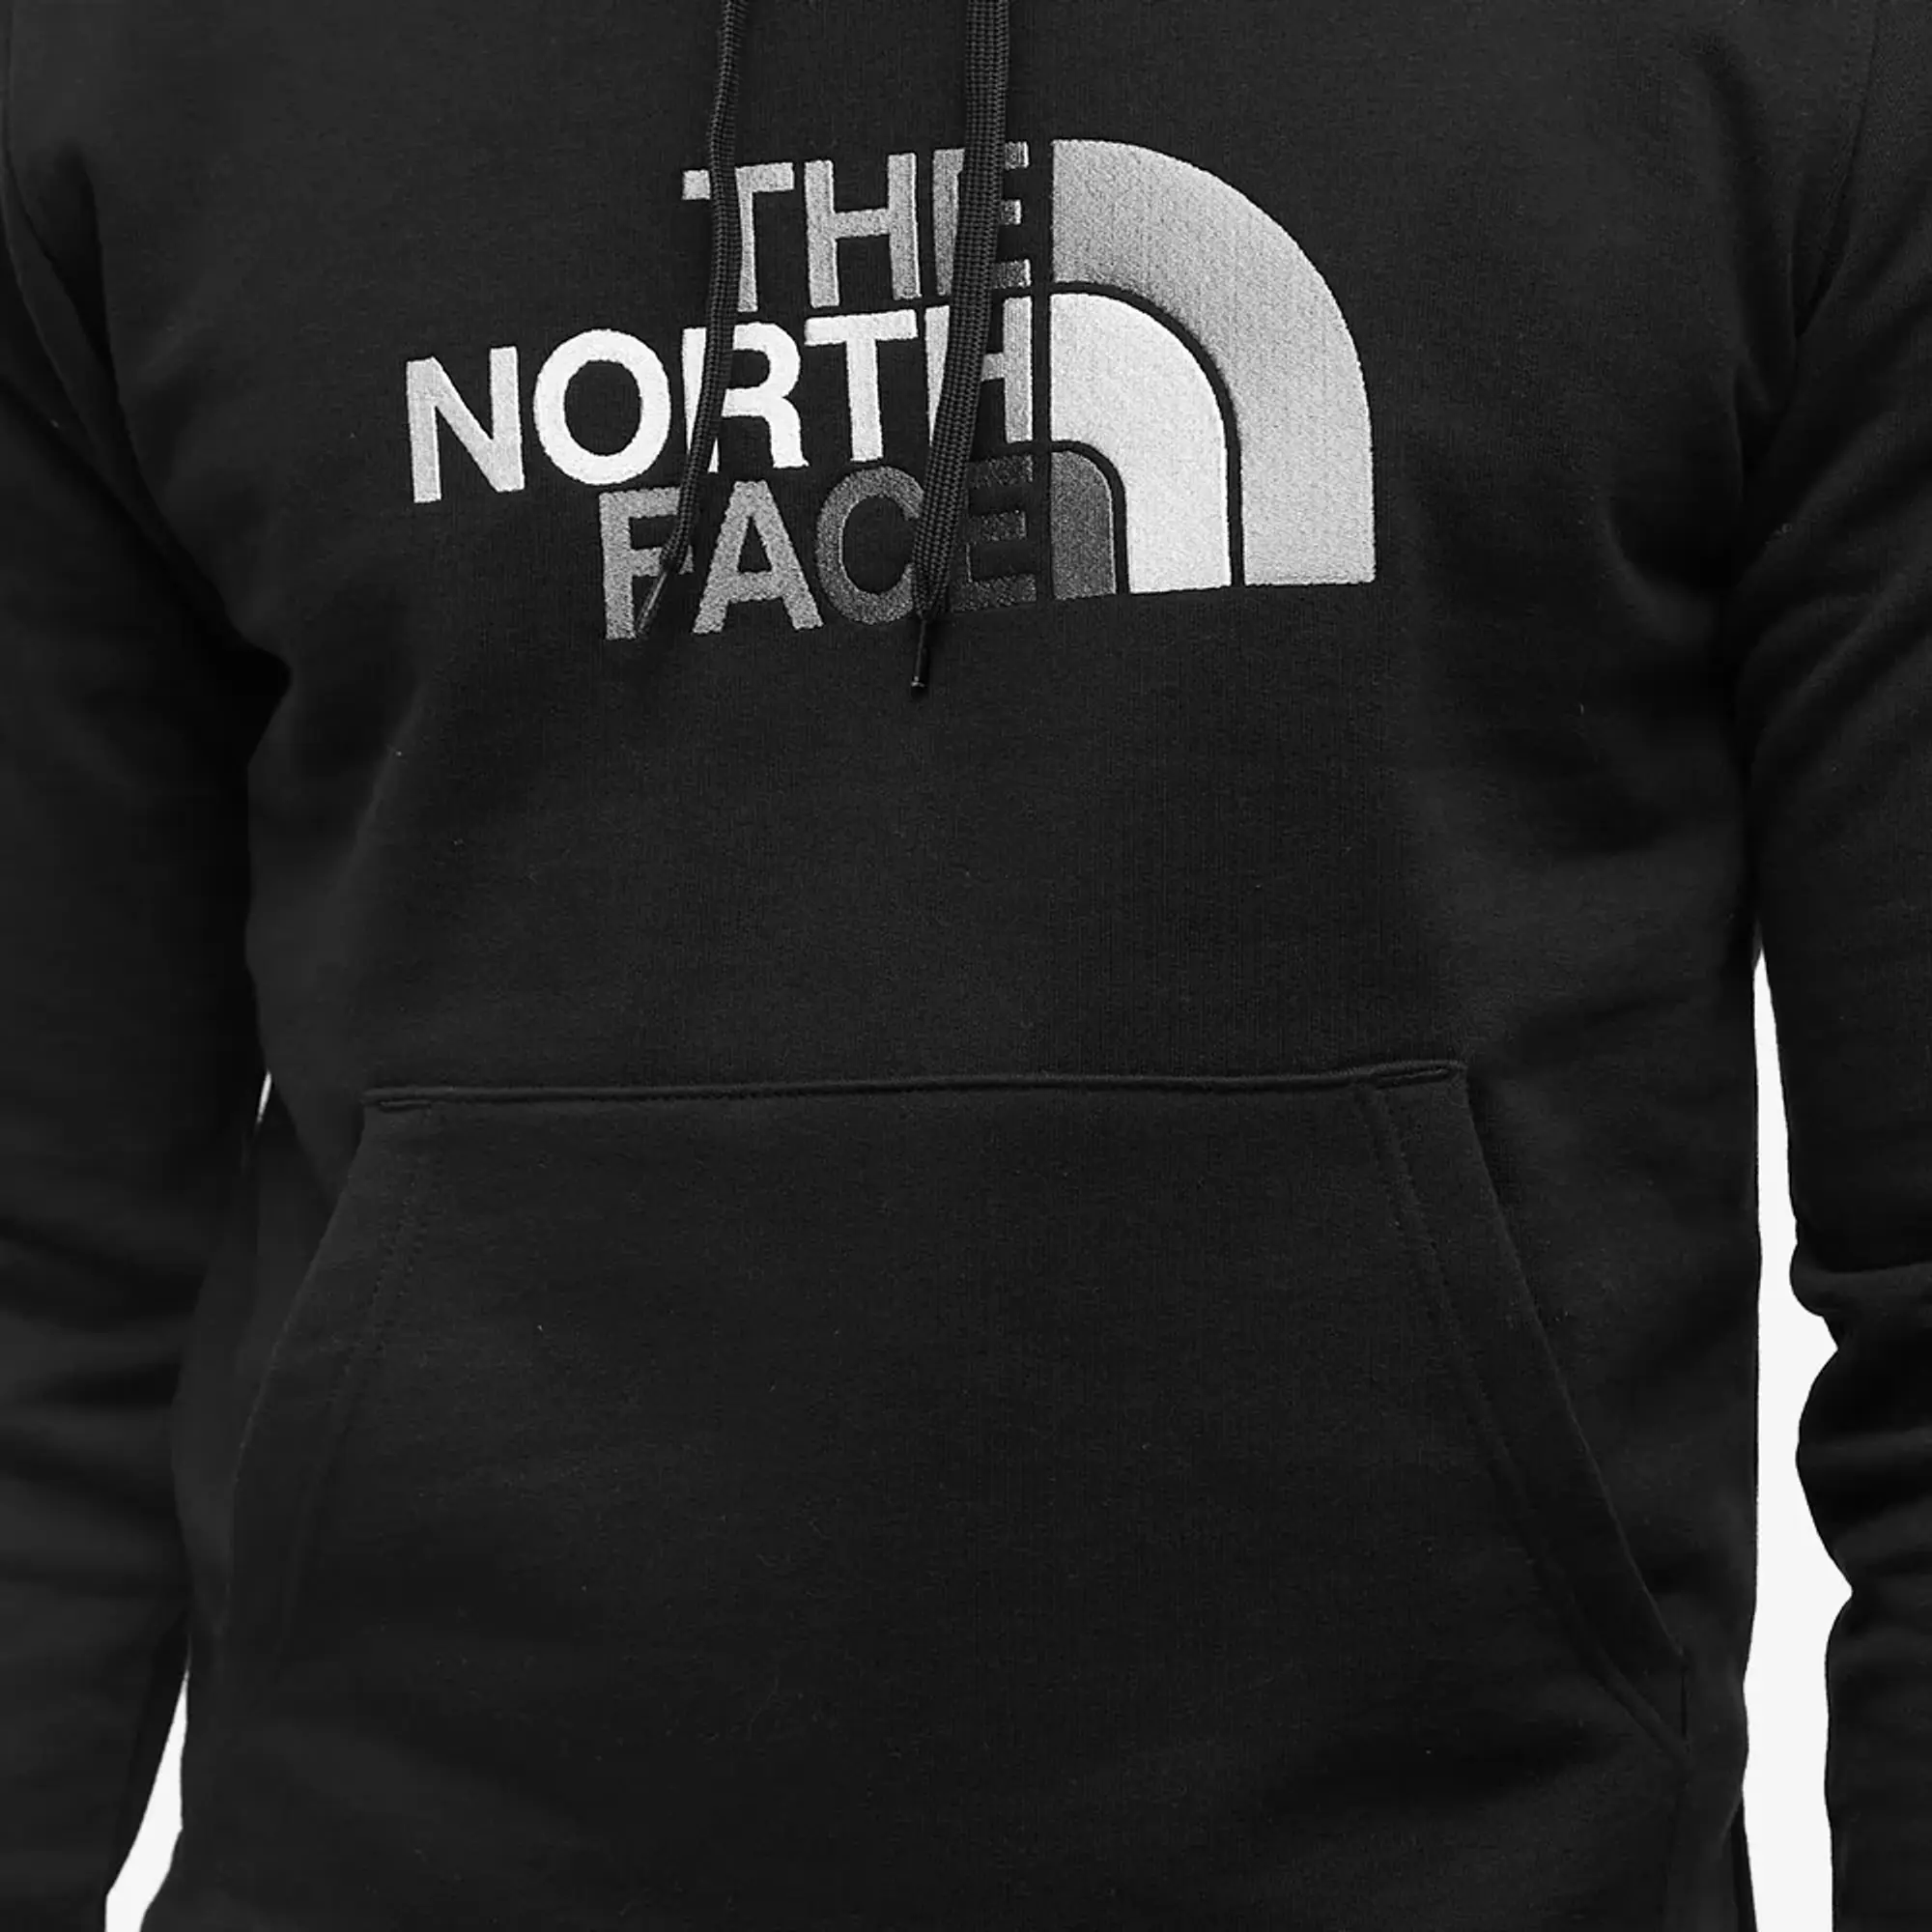 THE NORTH FACE Men's Drew Peak Pullover Hoodie - Black, Black